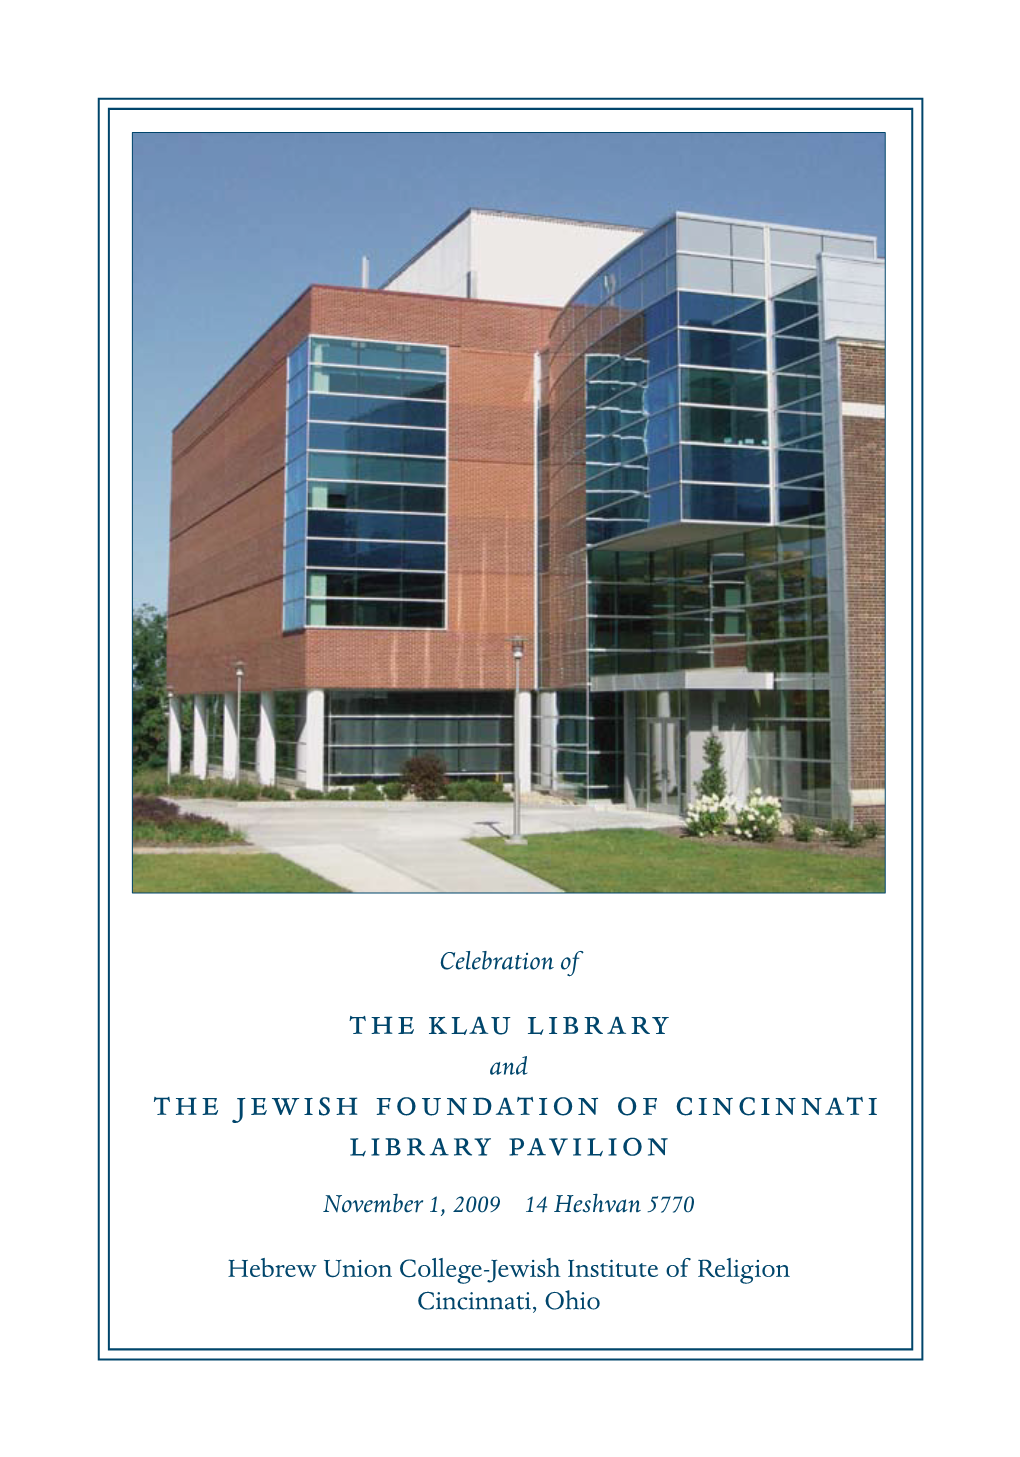 The Klau Library the Jewish Foundation of Cincinnati Library Pavilion